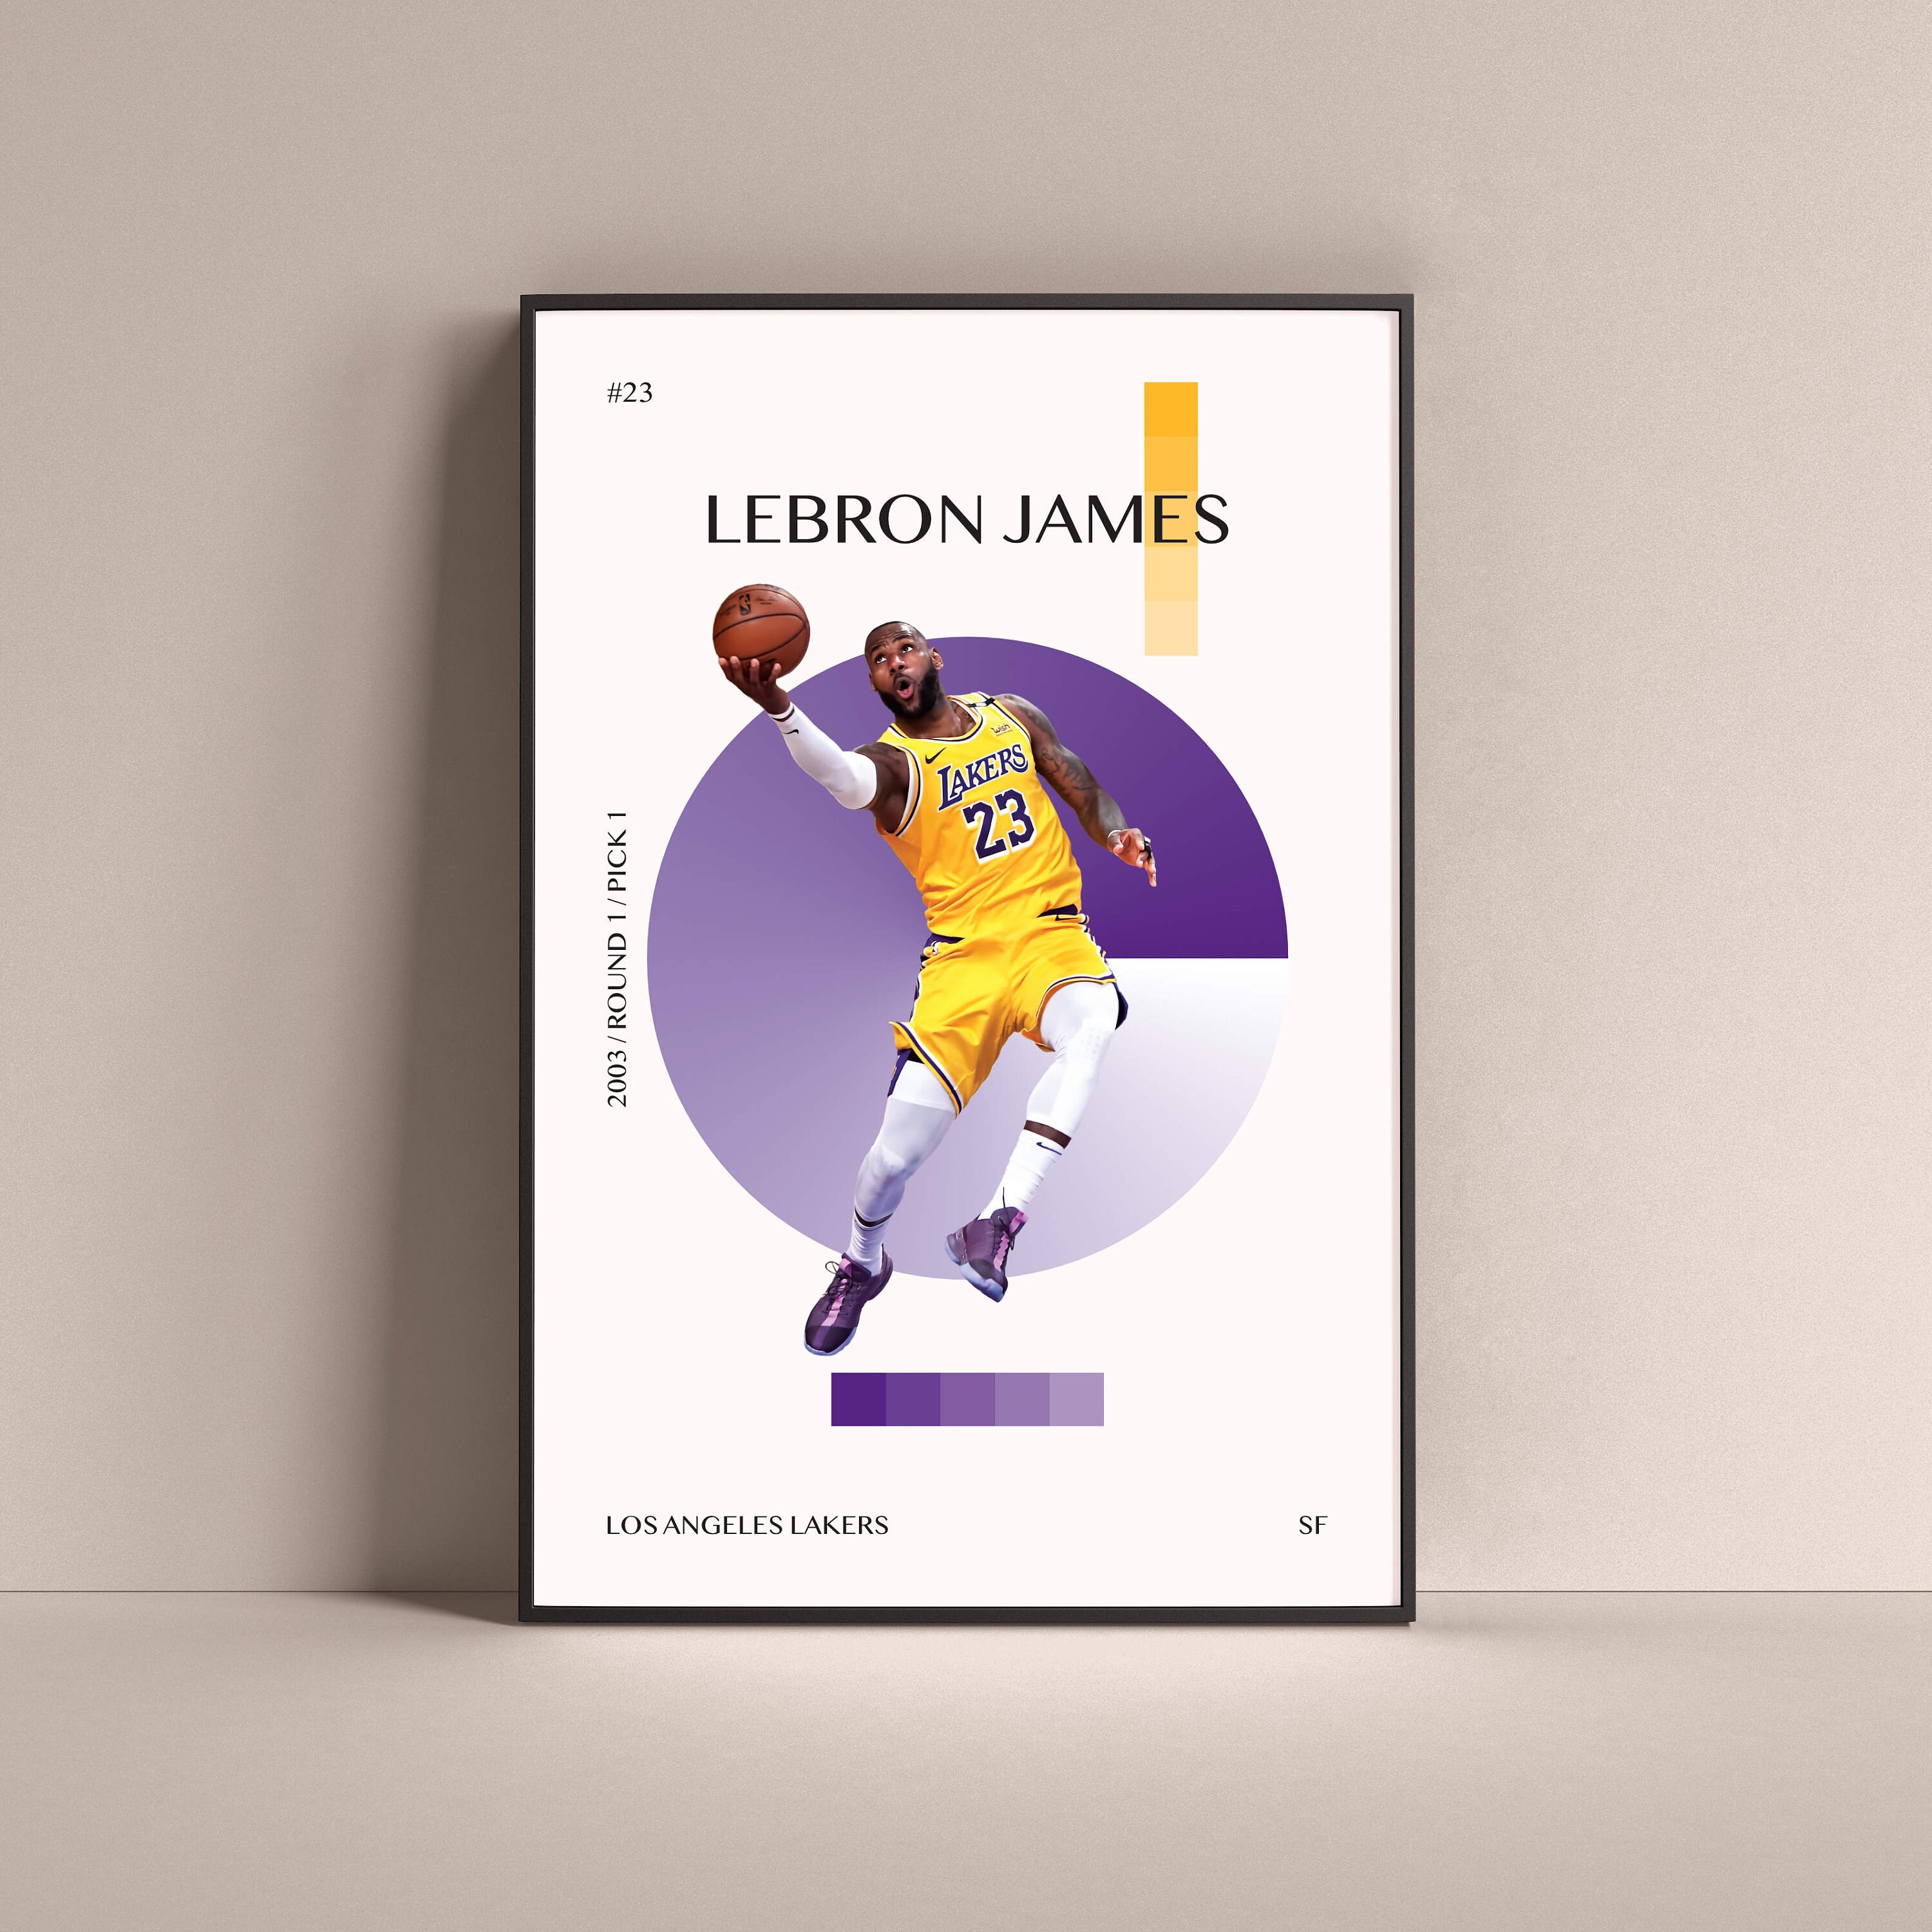 LeBron James Hand Painted Poster Print, Los Angeles Lakers Poster Print,  NBA, Basketball Print, All Star, Wall Decor, Wall art